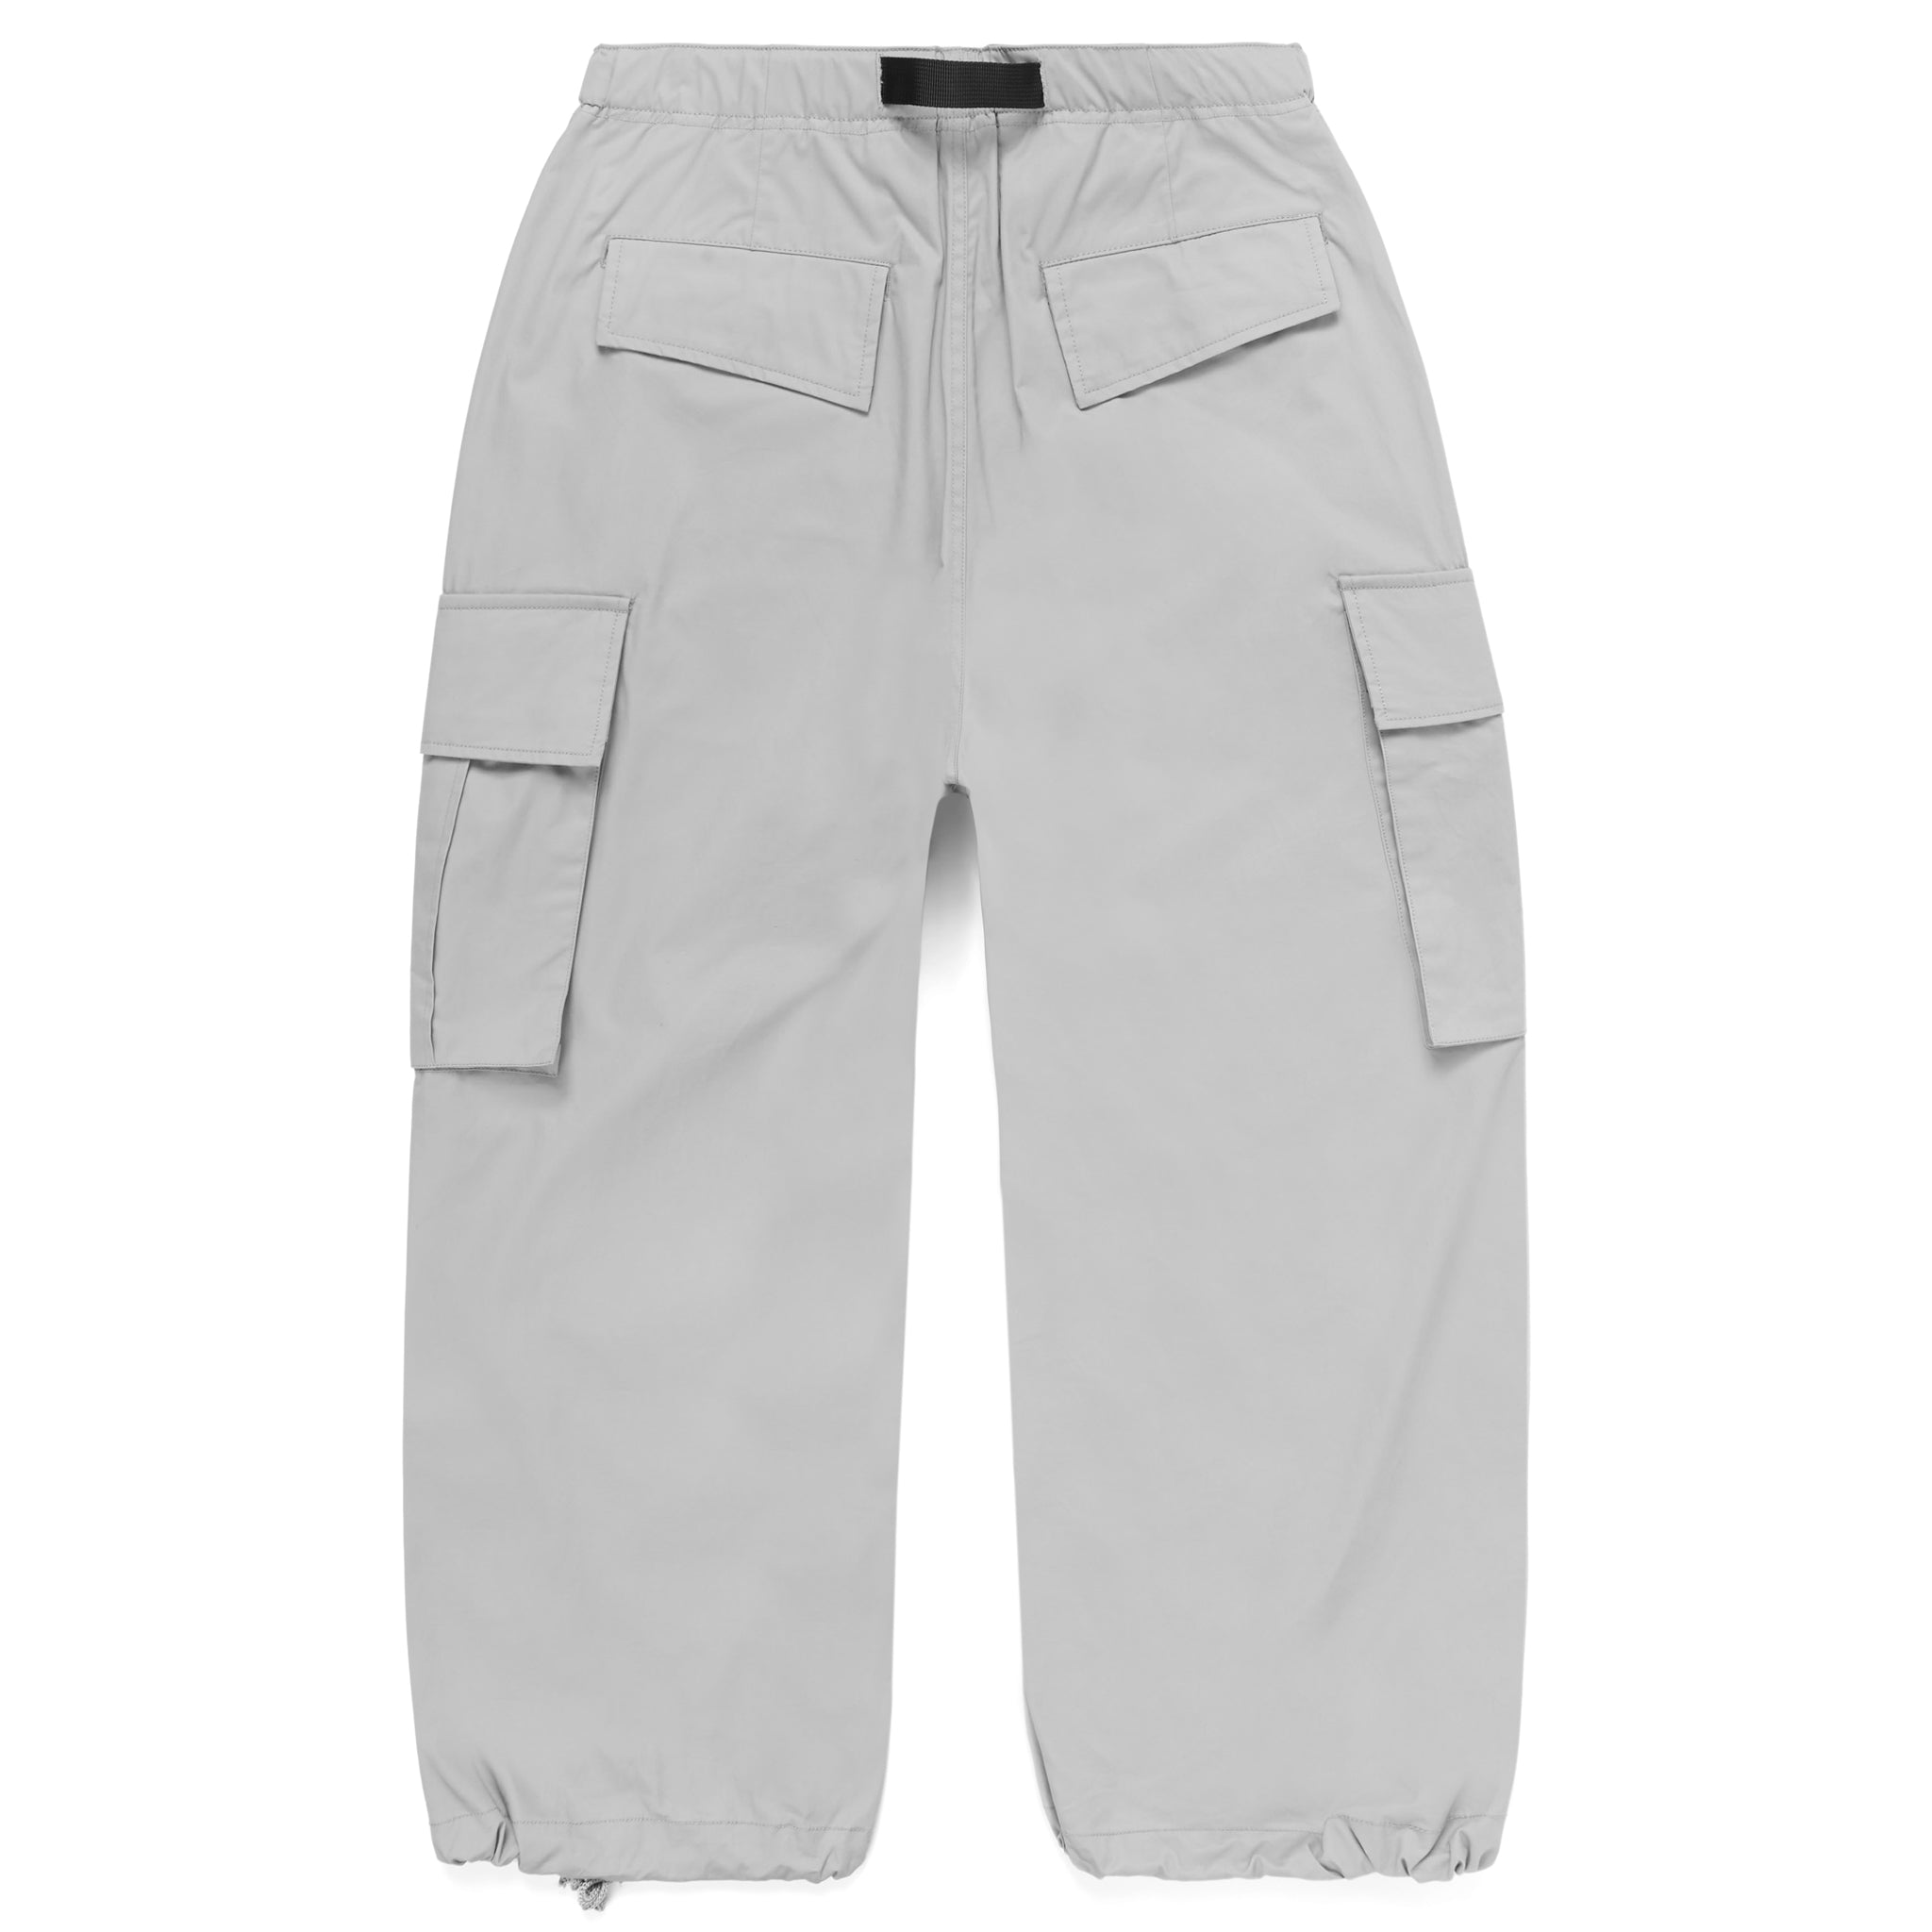 Grey Utility Pants